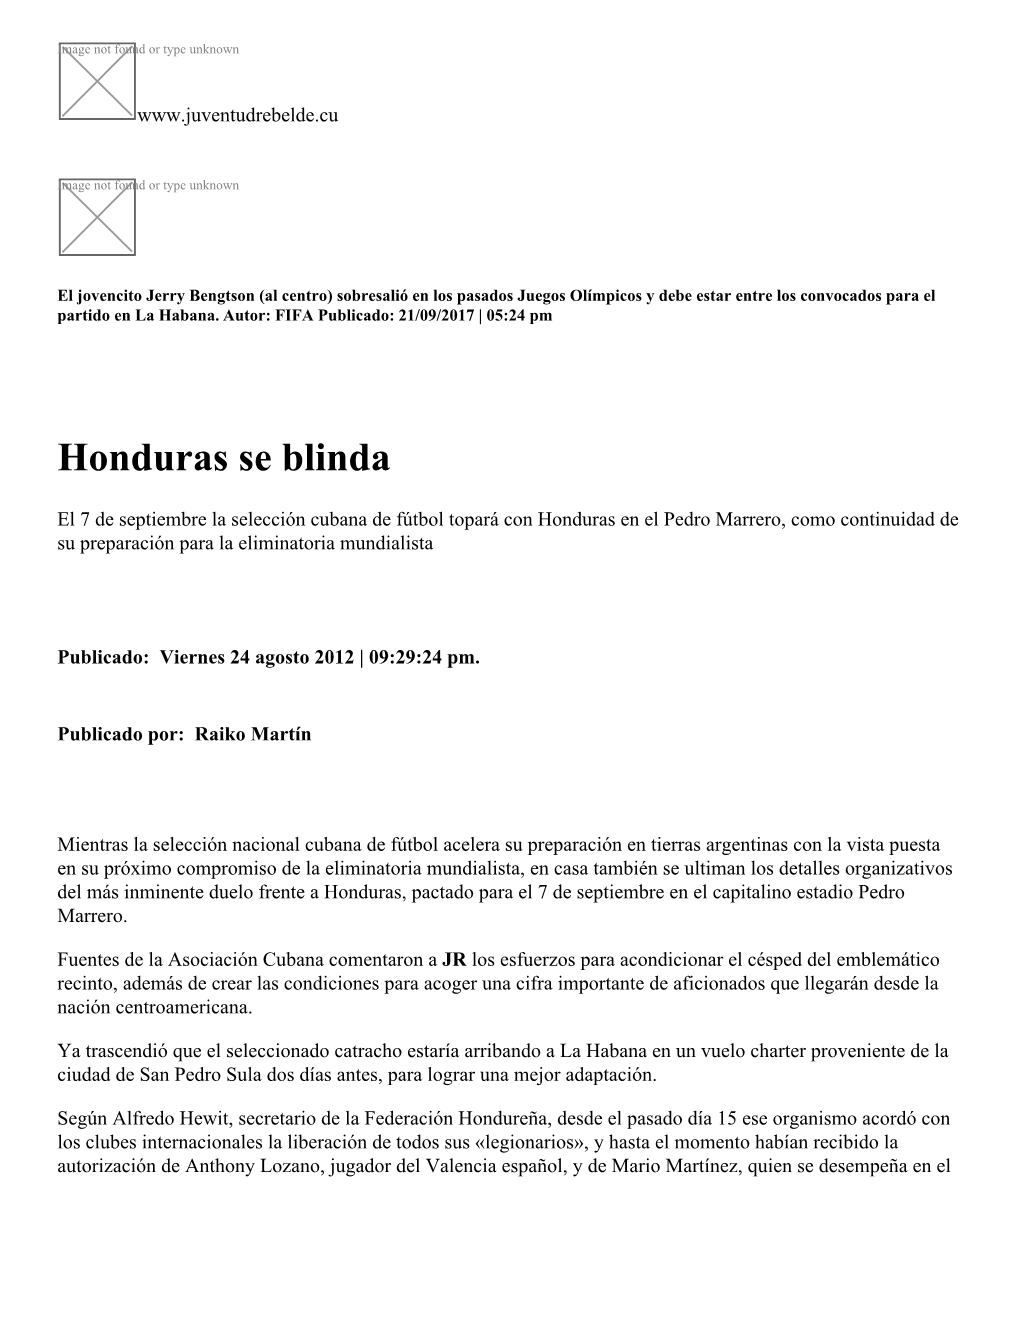 Honduras Se Blinda